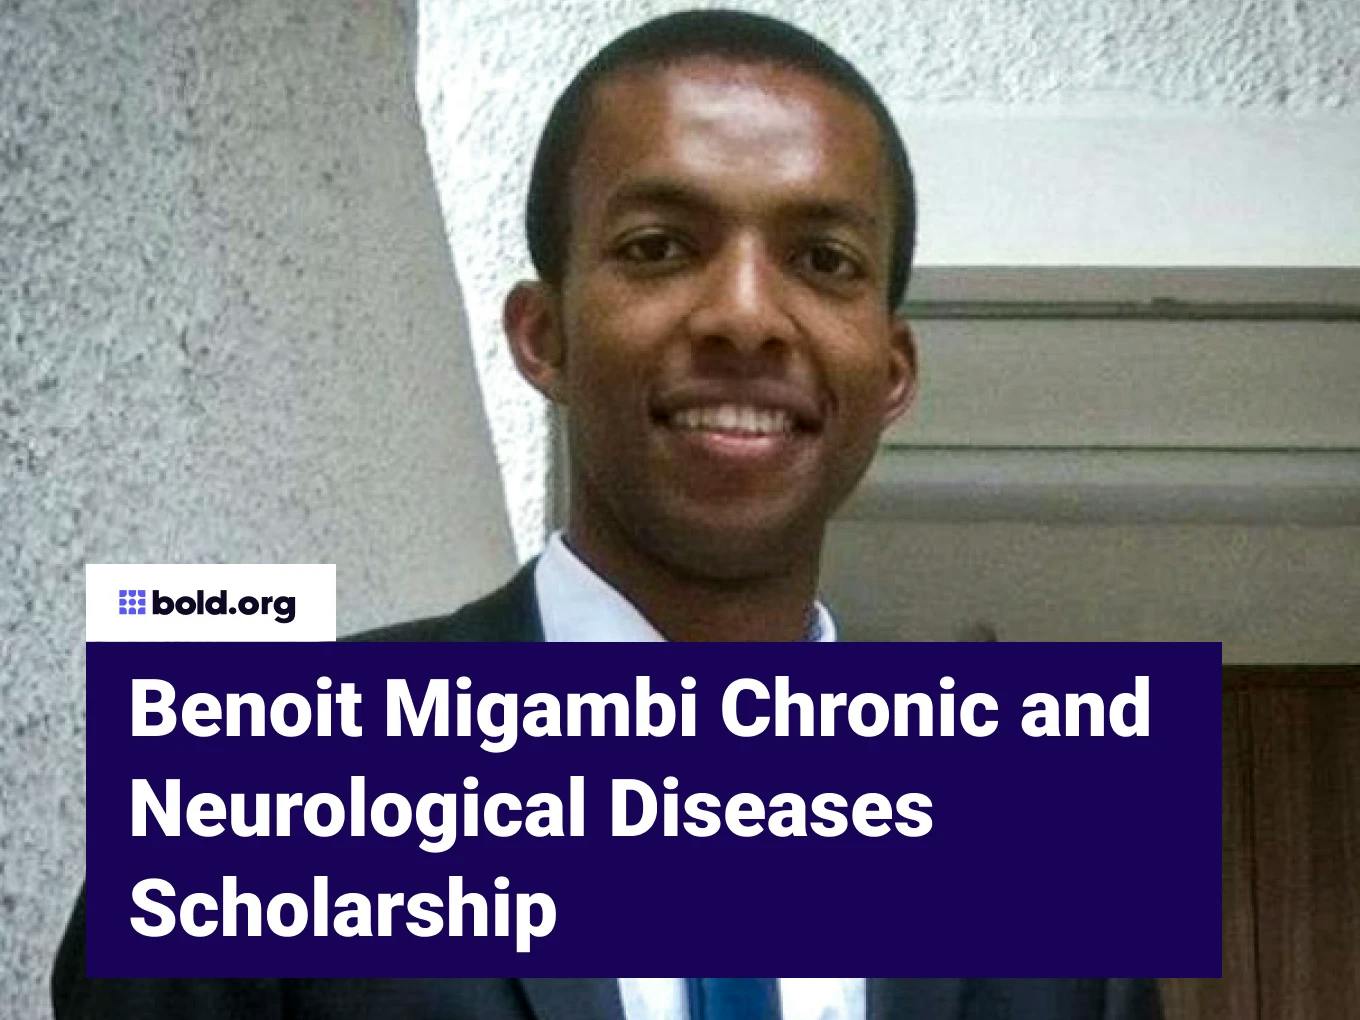 Benoit Migambi Chronic and Neurological Diseases Scholarship